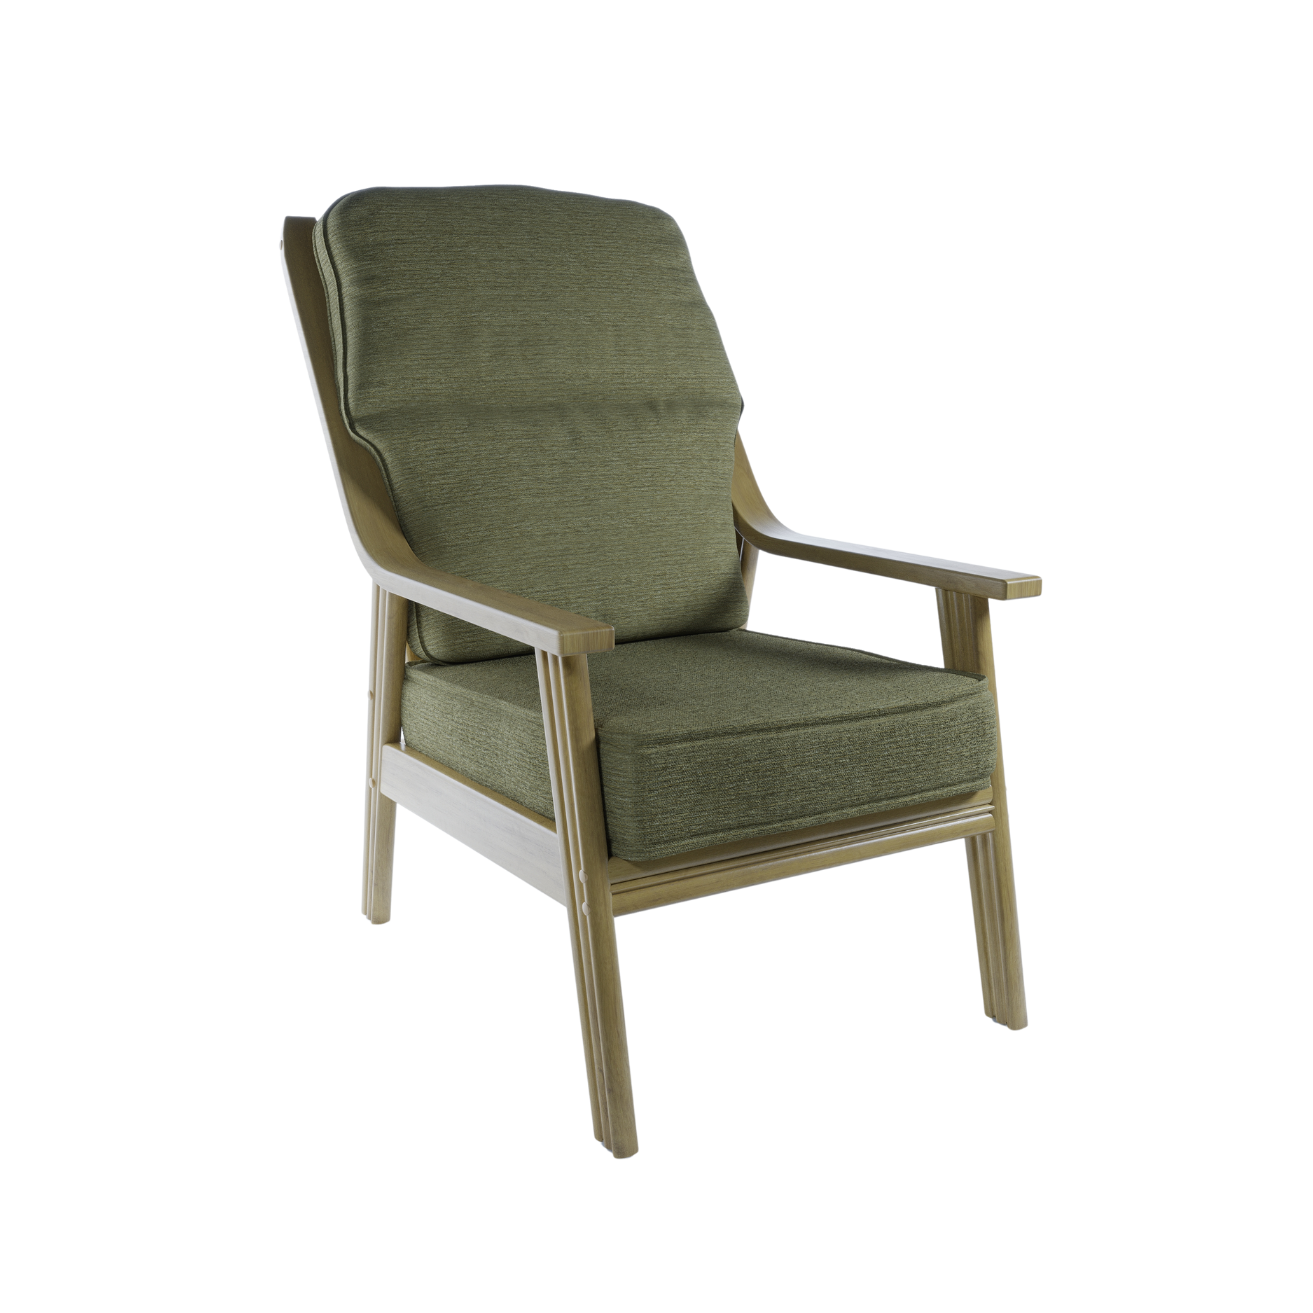 Benham Chair